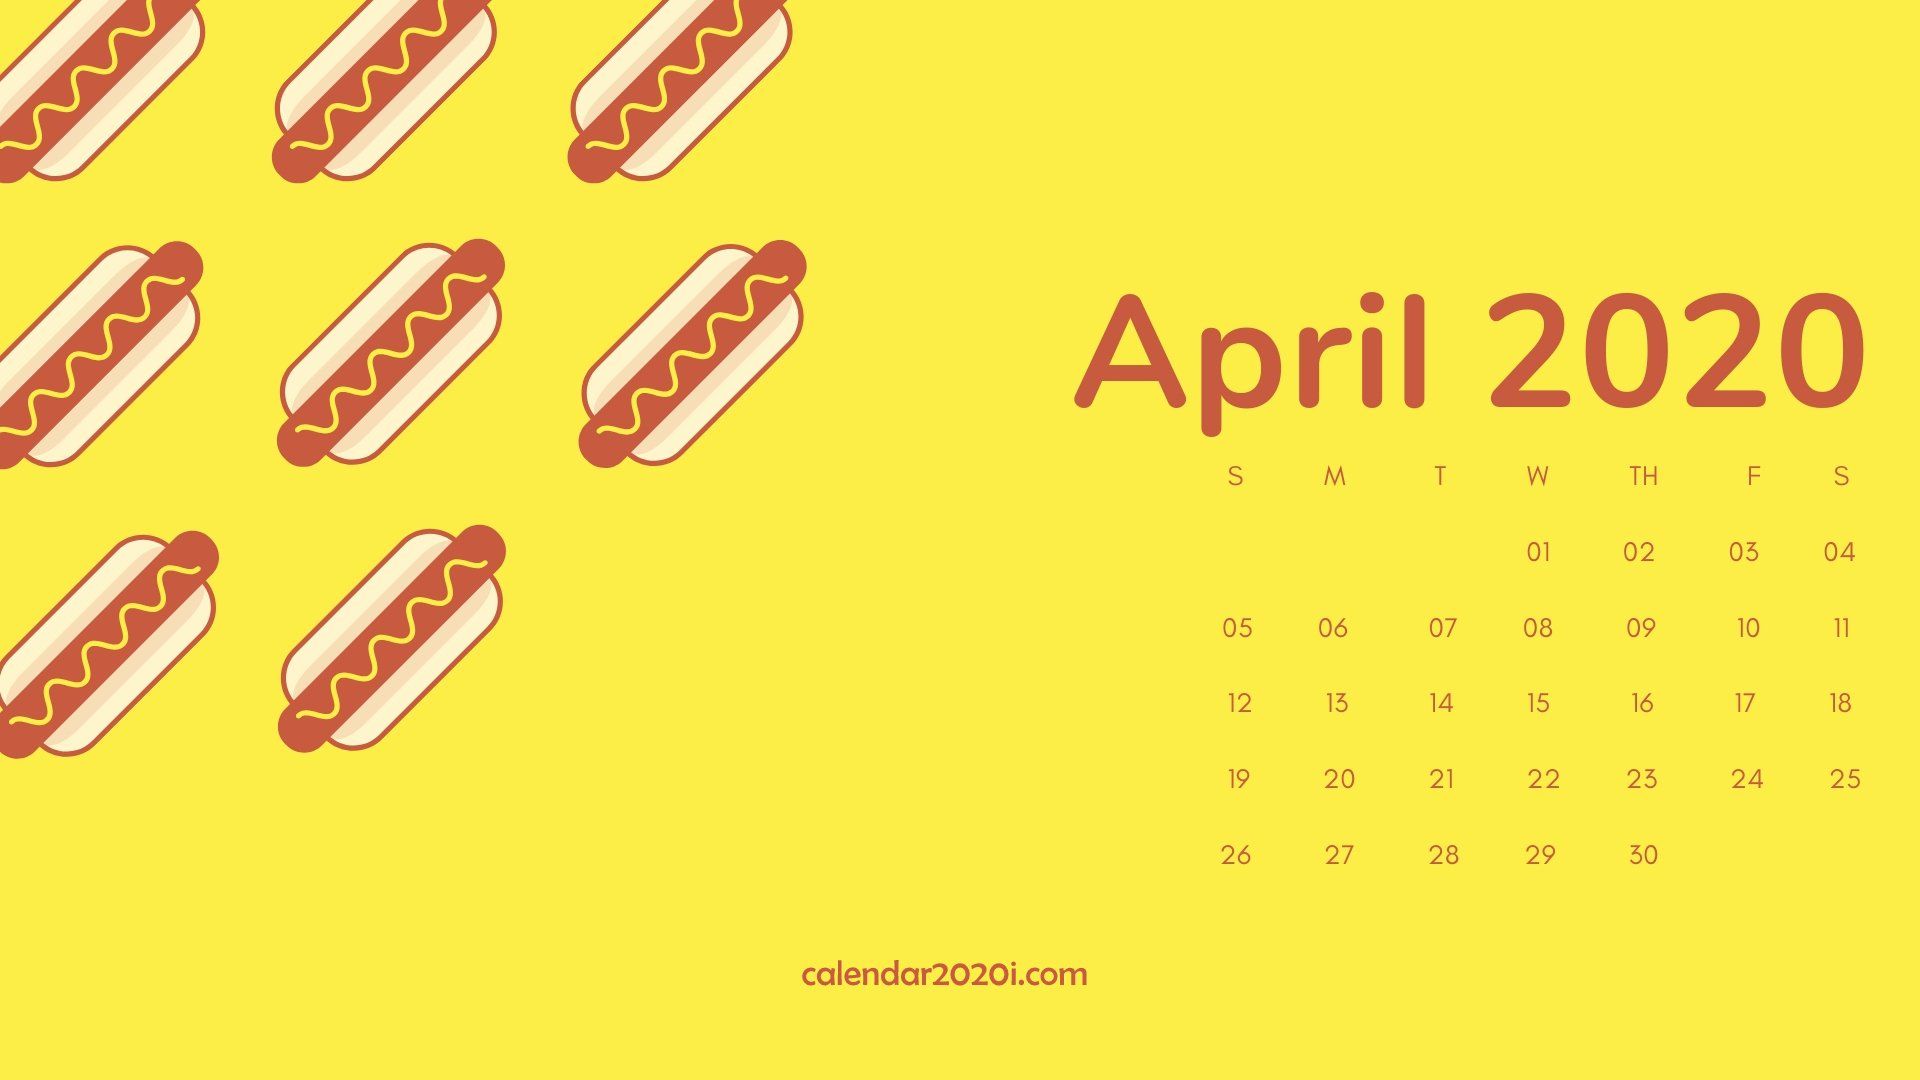 April 2020 Calendar Desktop Wallpaper in 2019 Calendar